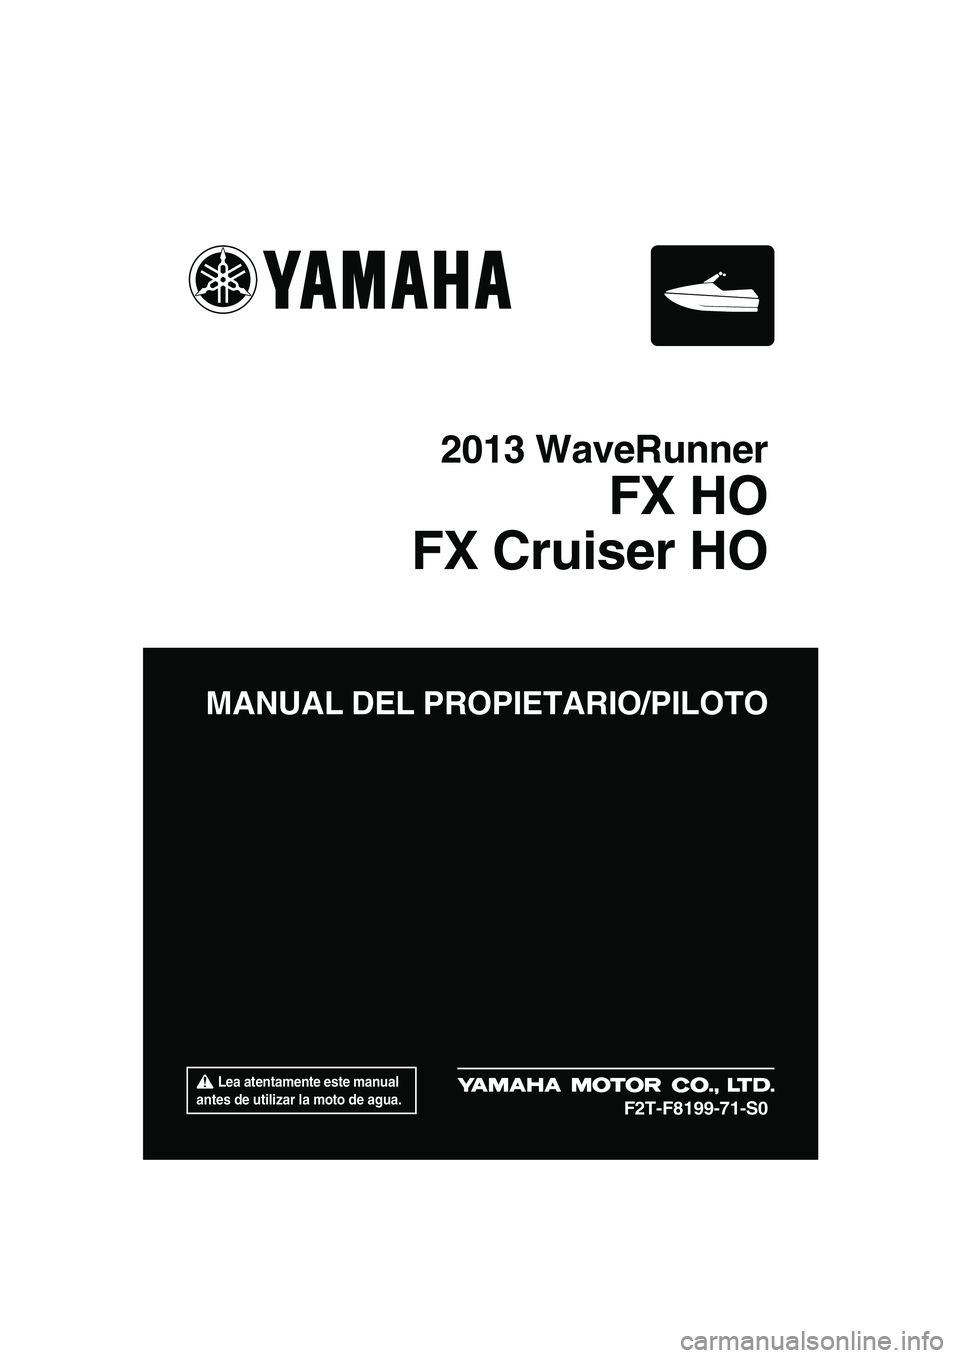 YAMAHA FX HO 2013  Manuale de Empleo (in Spanish) 